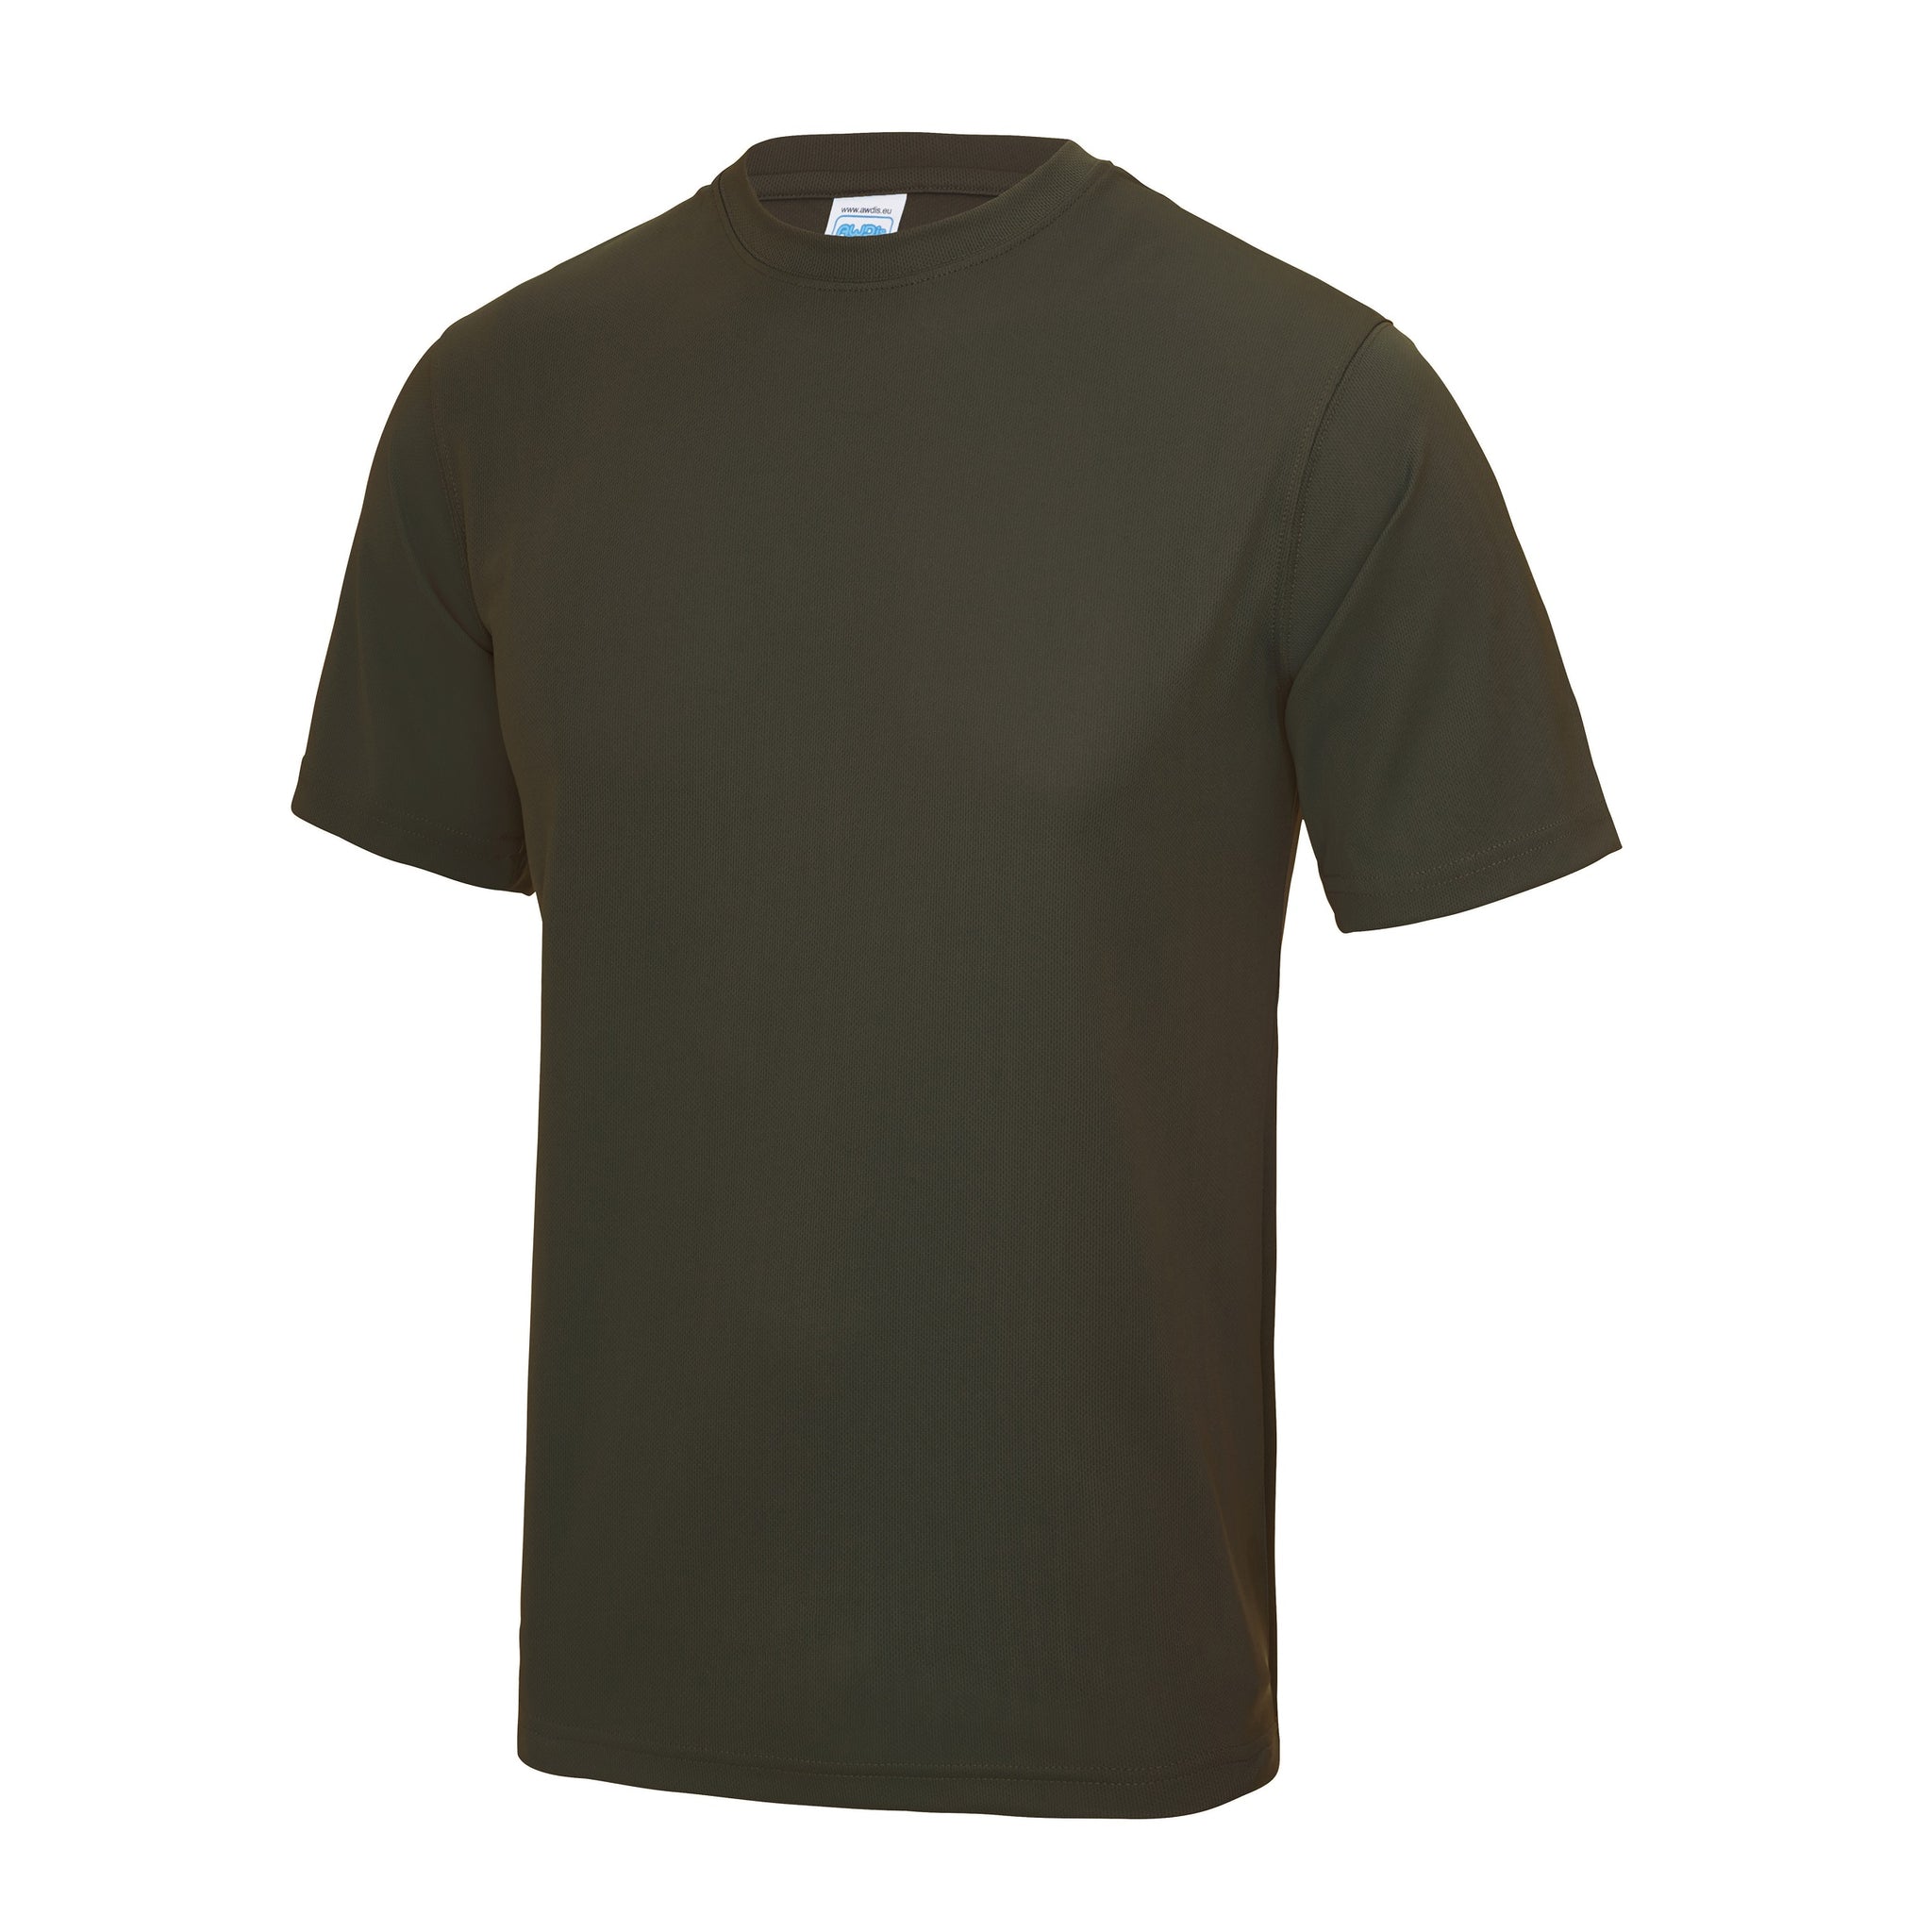 Medium Olive Sports T shirt - choose logo